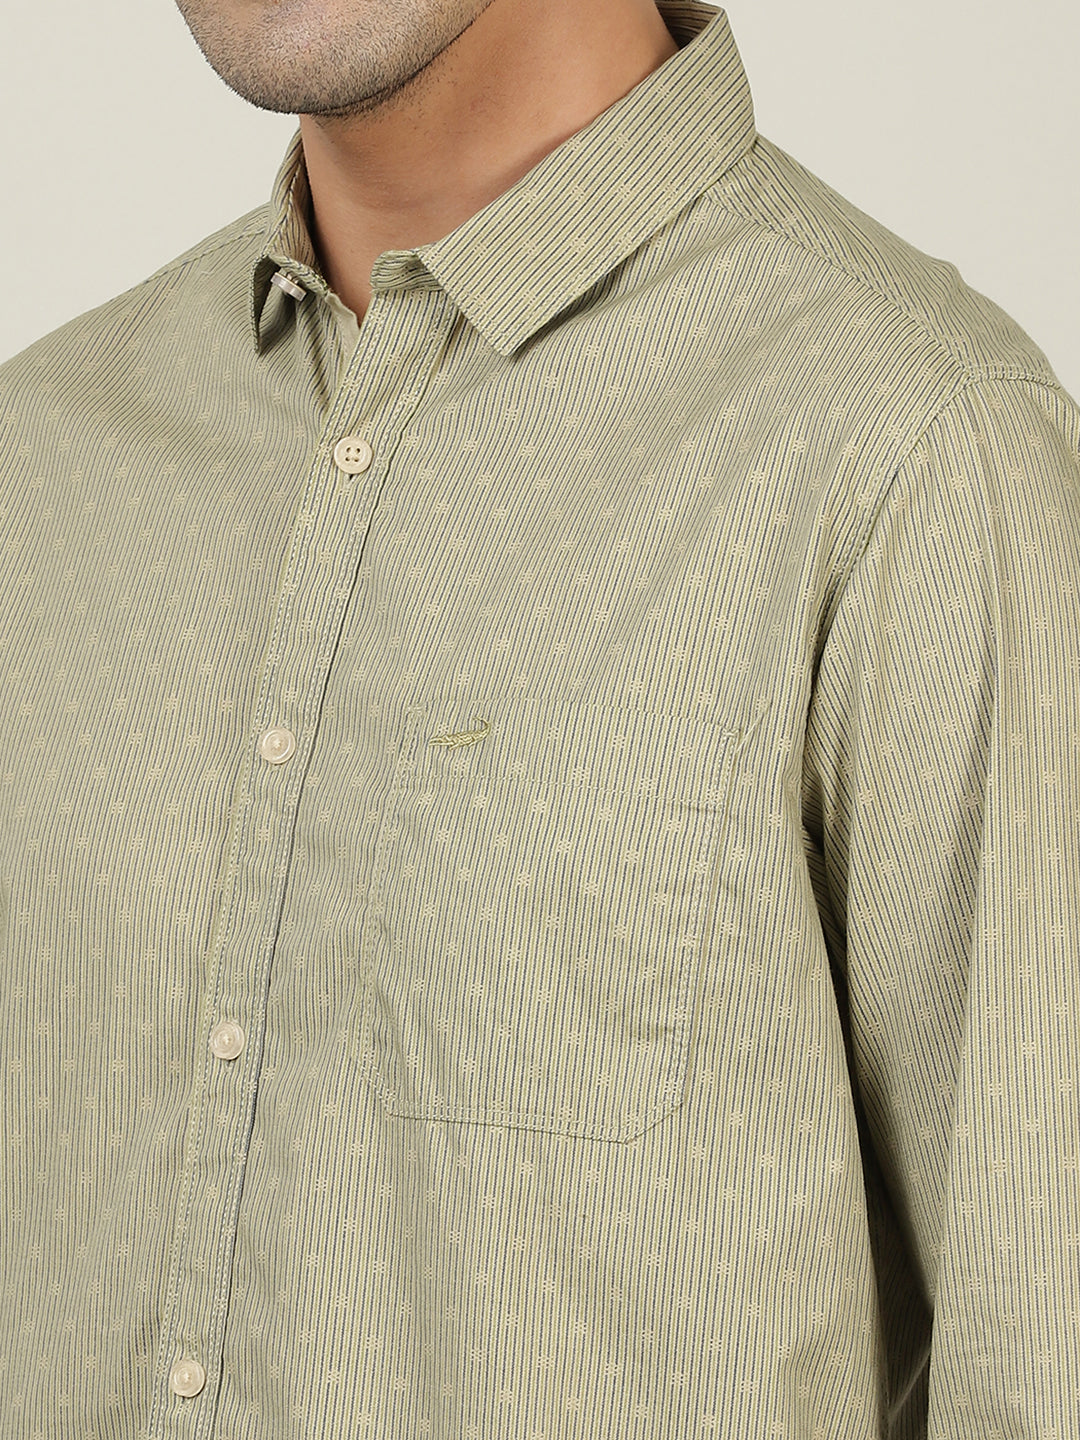 Crocodile Men's Pure Cotton Casual Shirt